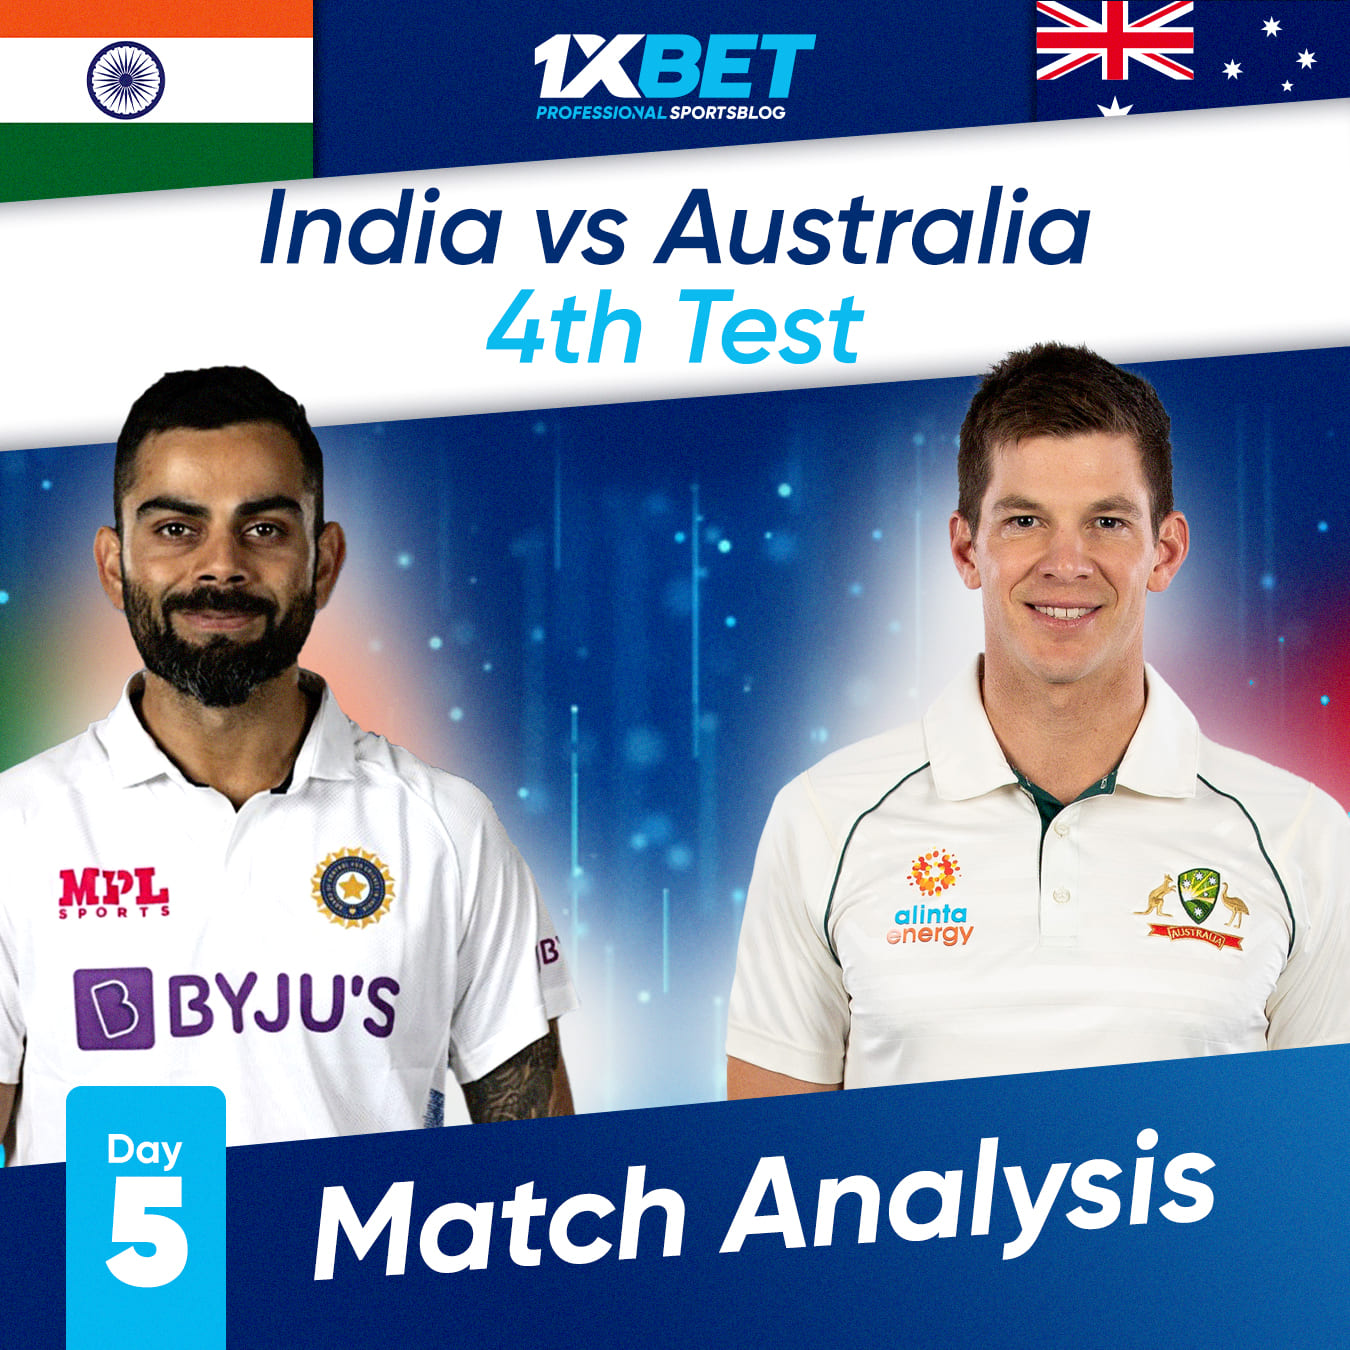 India vs Australia, 4th Test, Day 5 Match Analysis